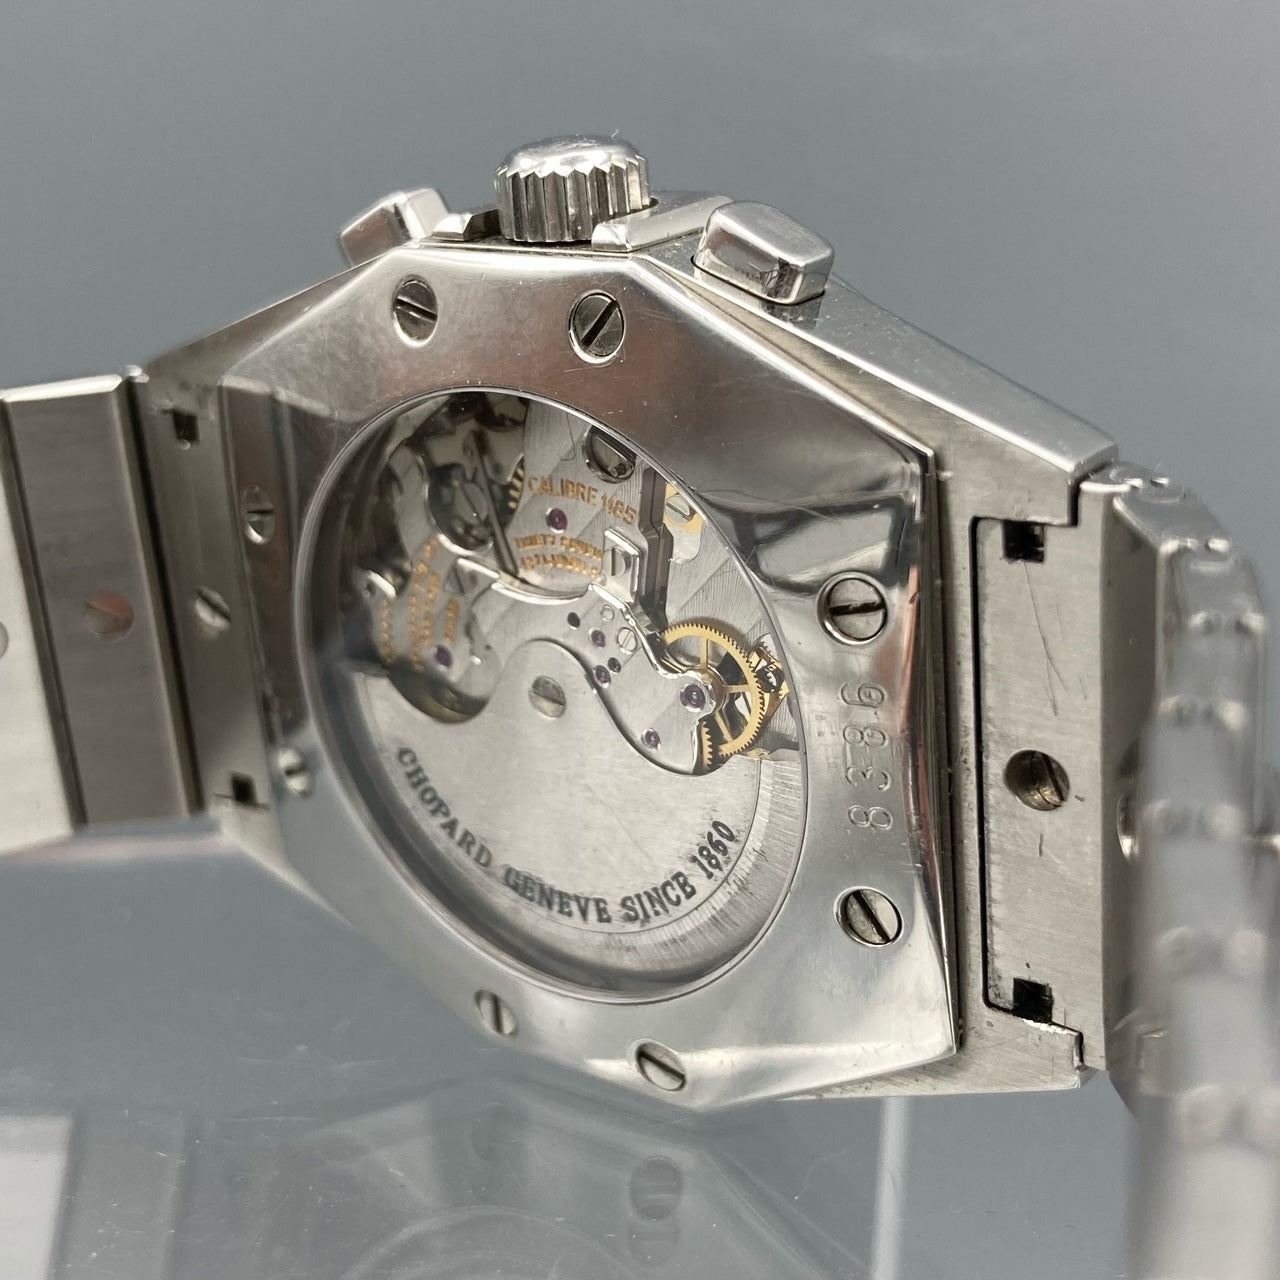 Chopard Automatic St Moritz Chronograph Watch - 8386